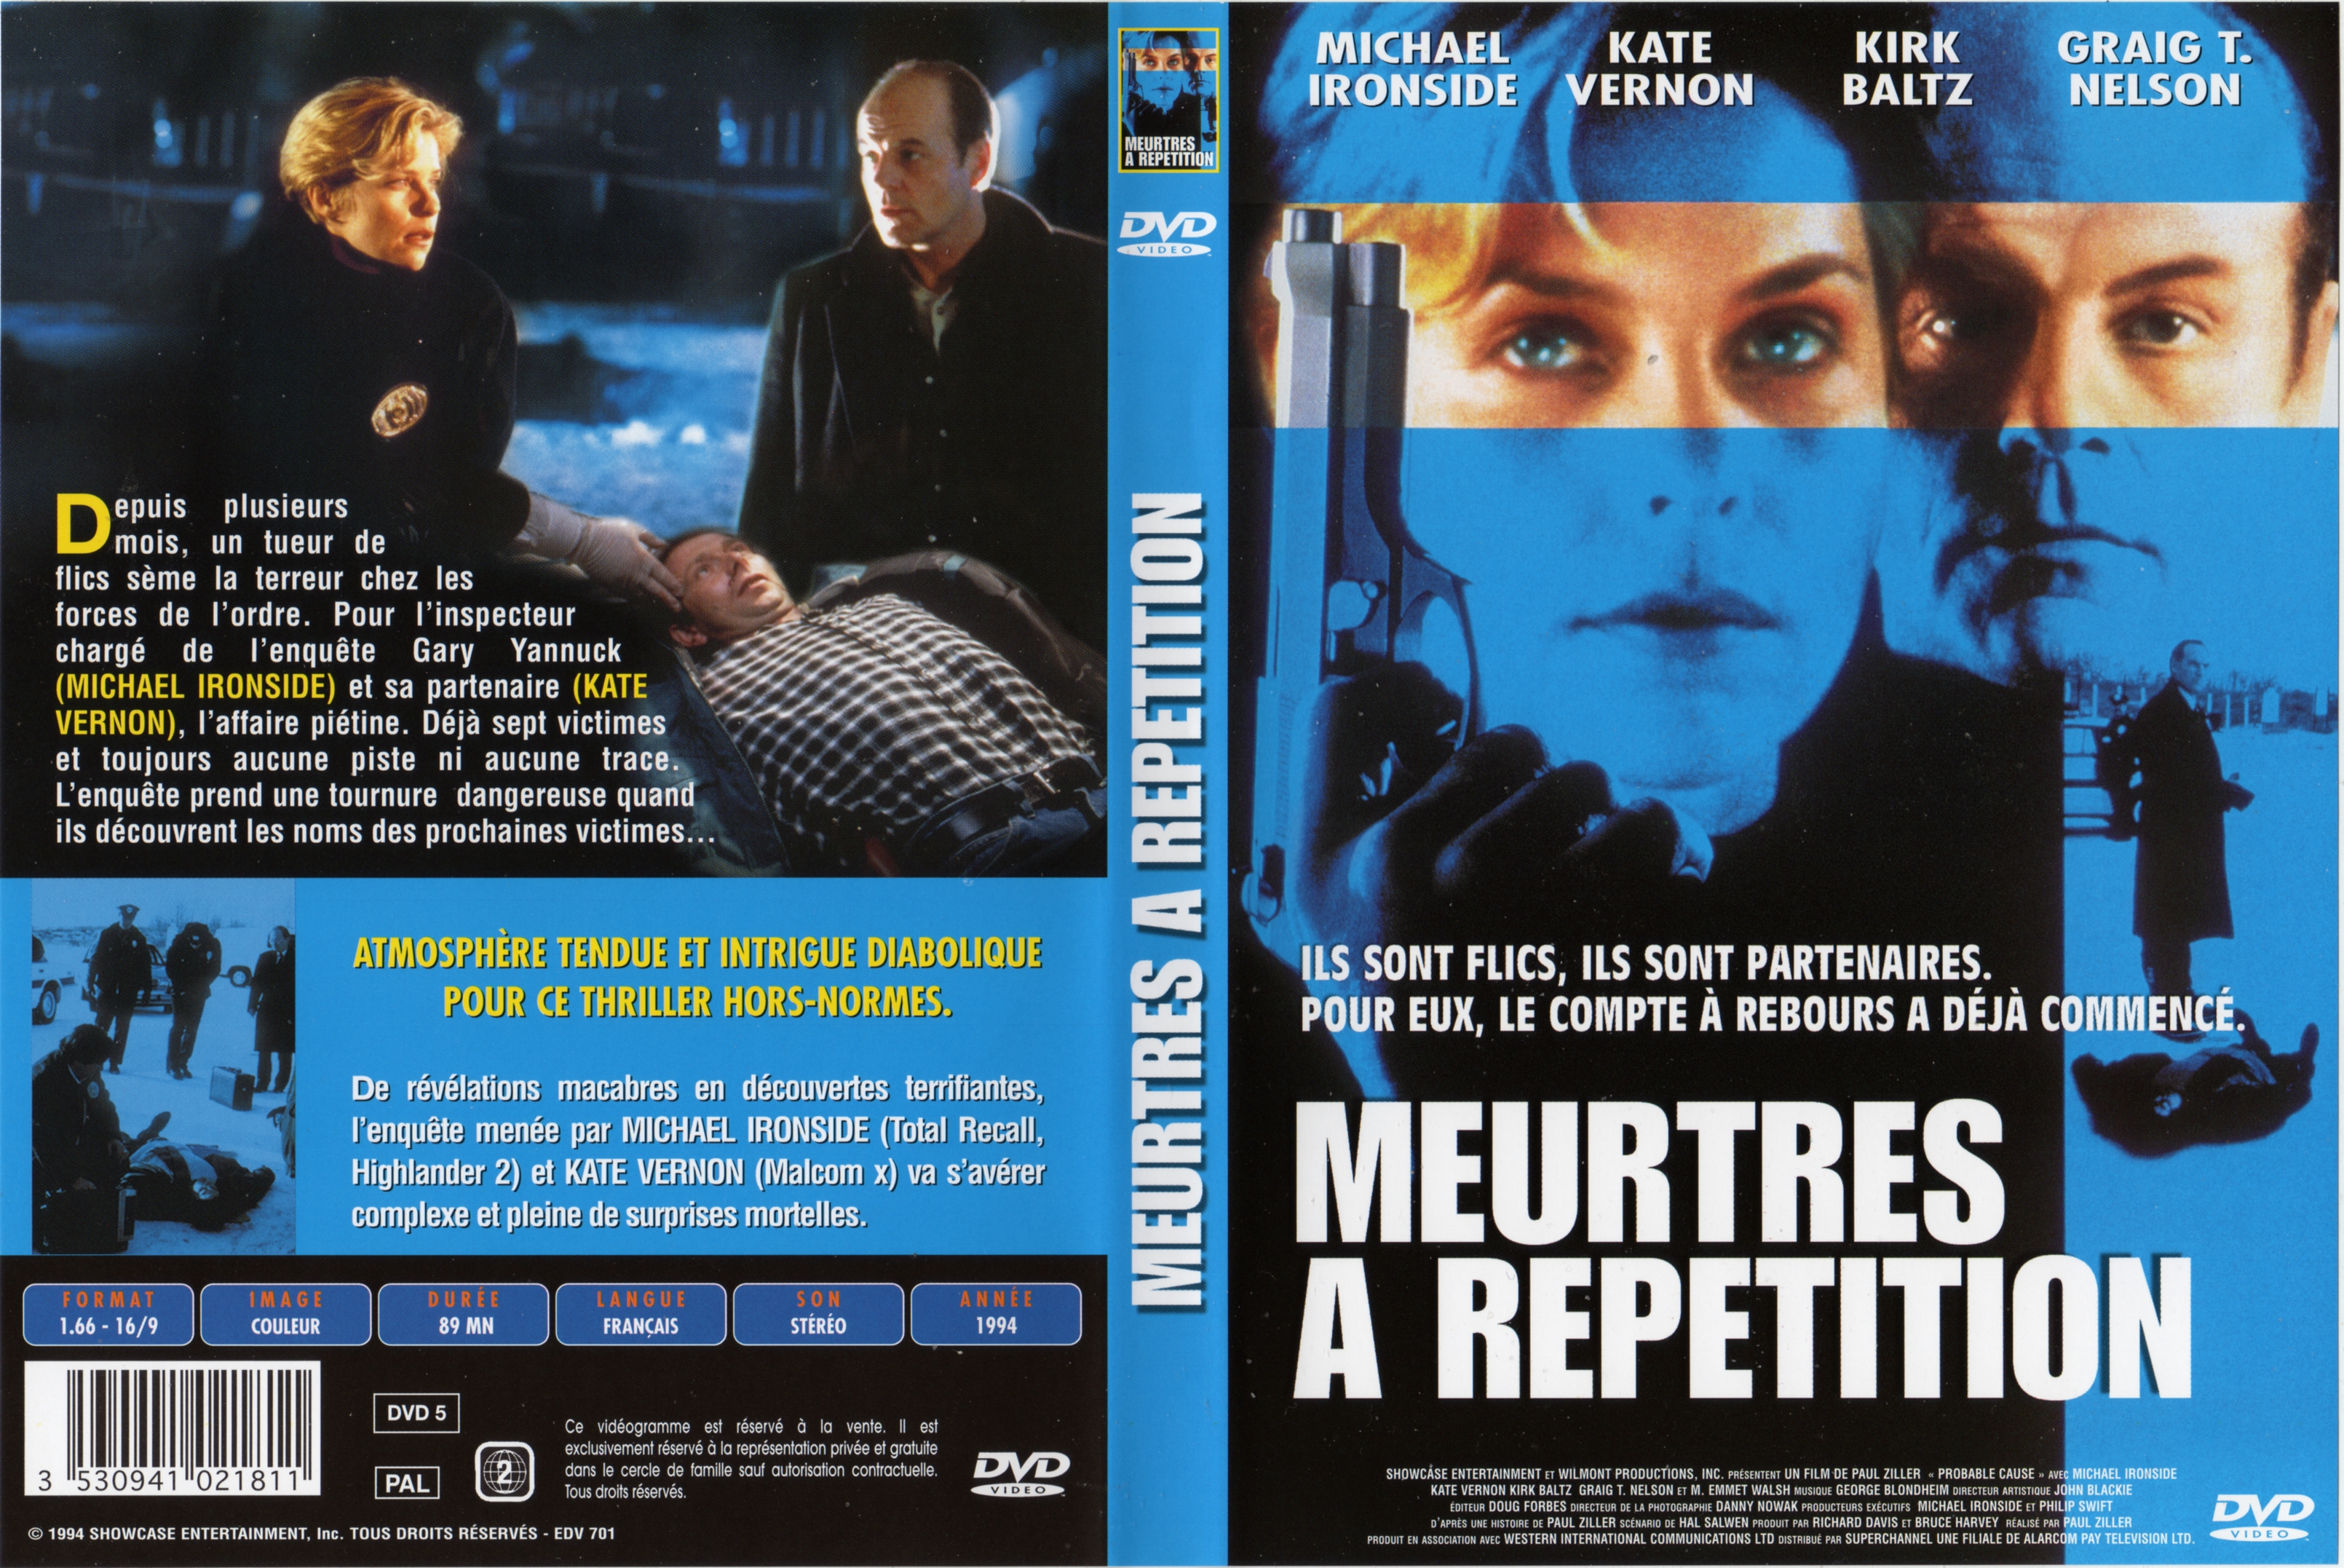 Jaquette DVD Meurtres  repetition